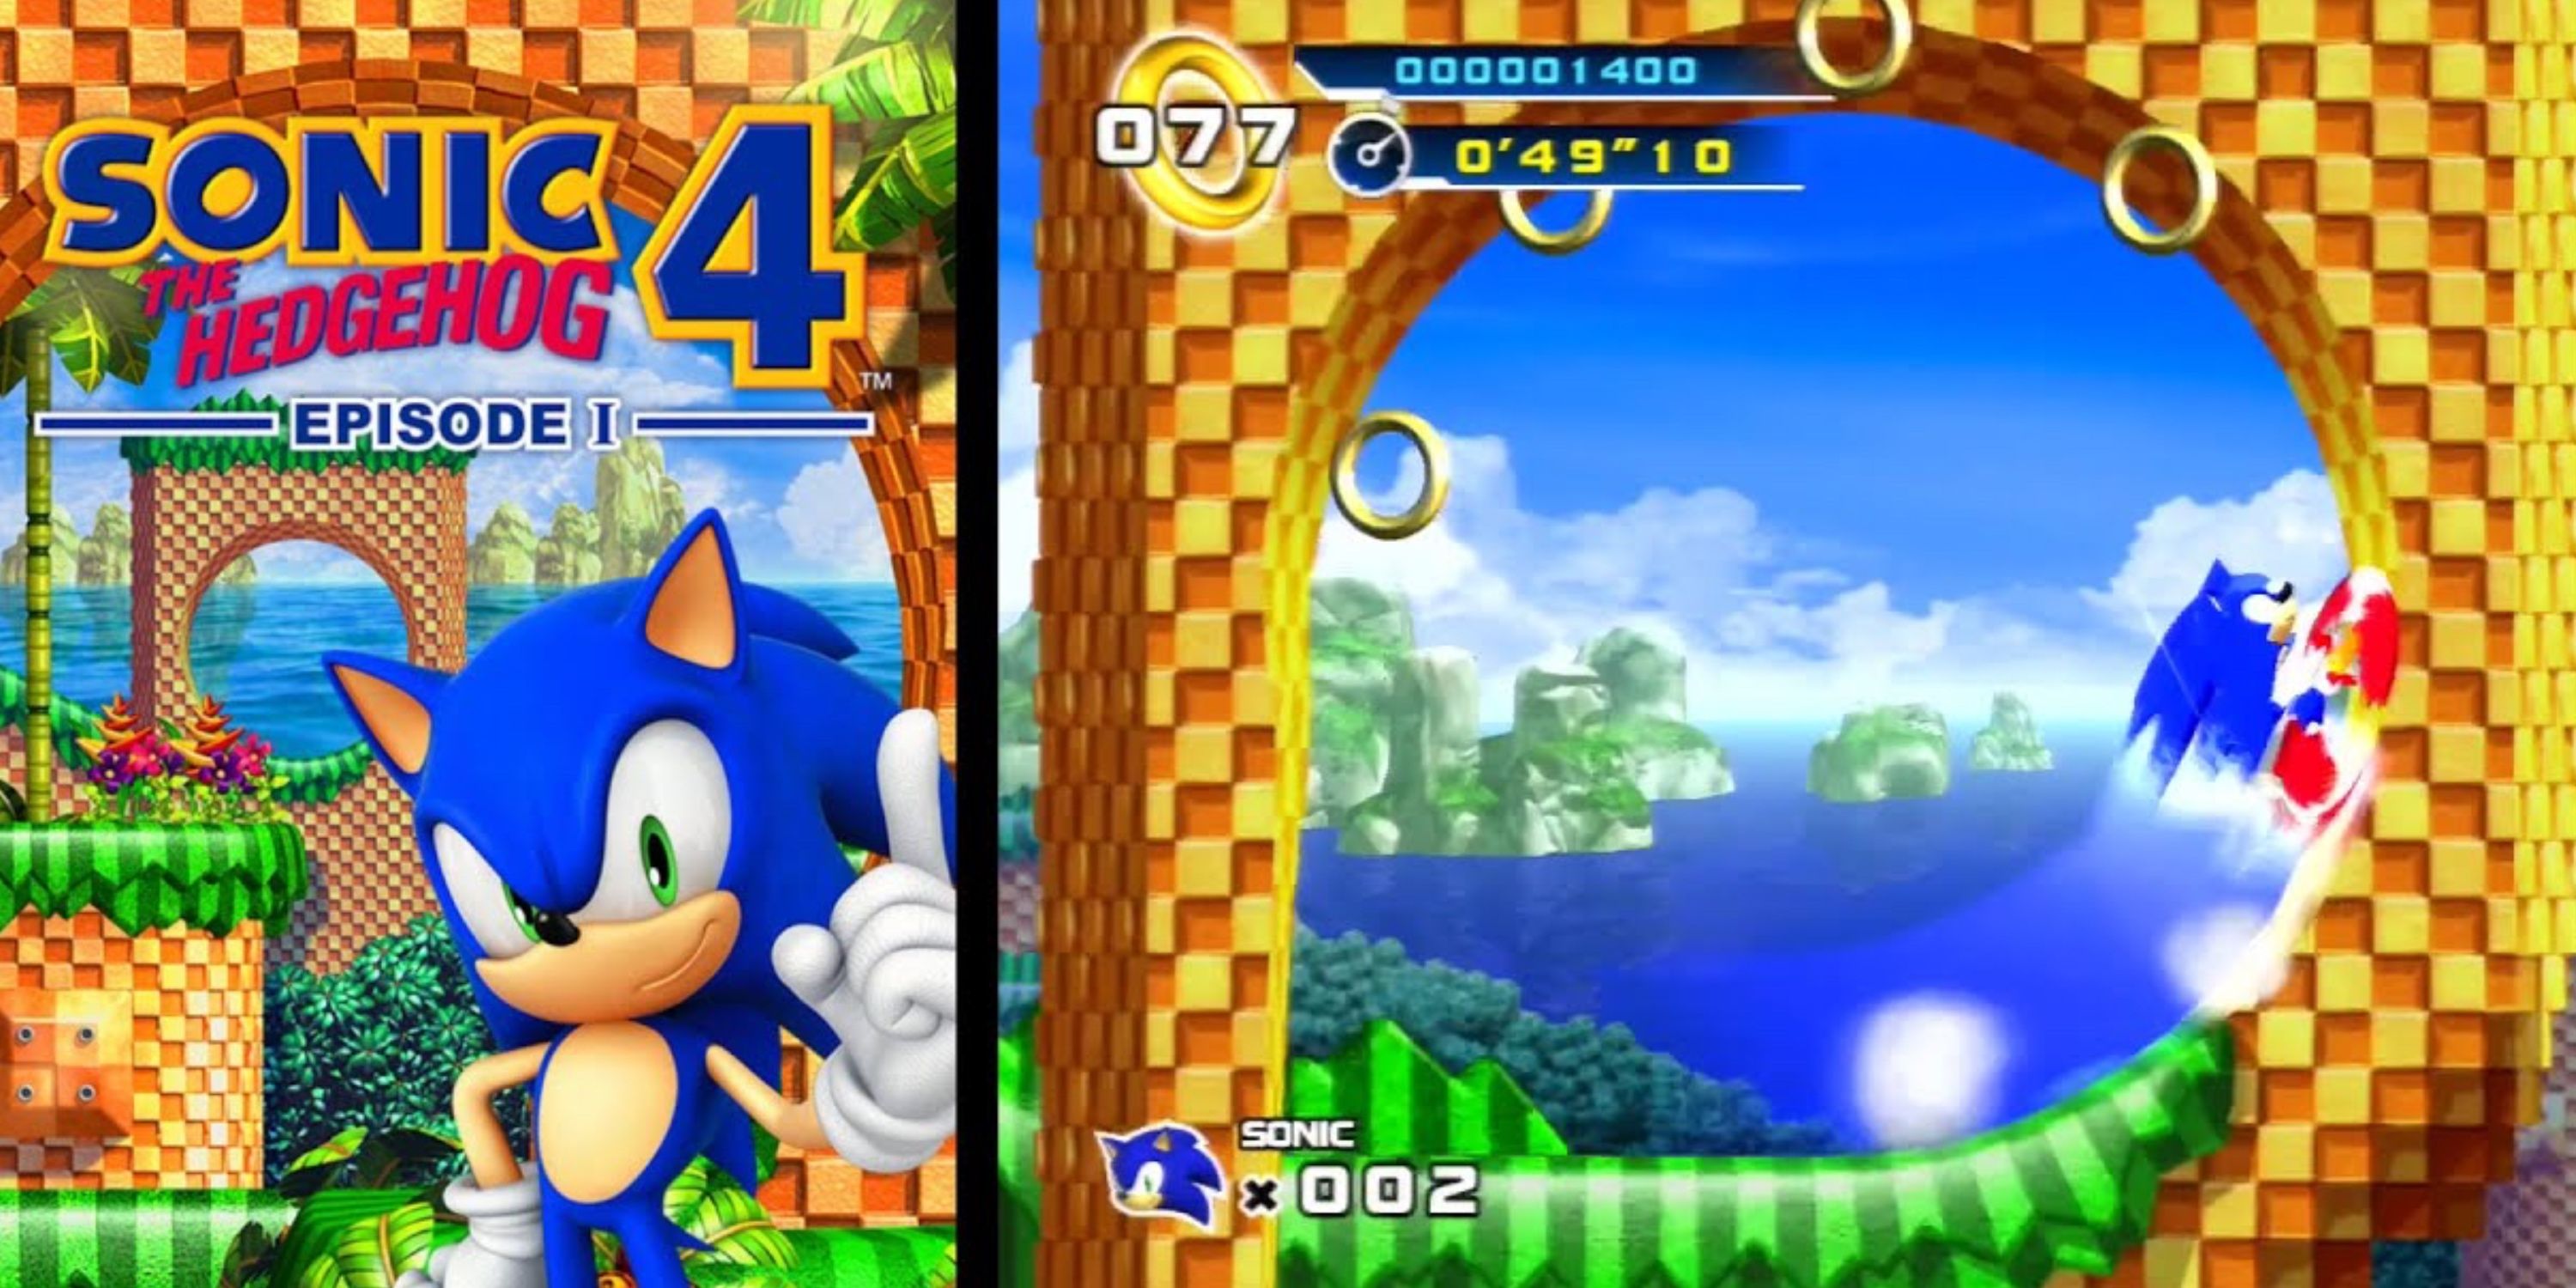 screenshot of sonic 4 gameplay and cover art